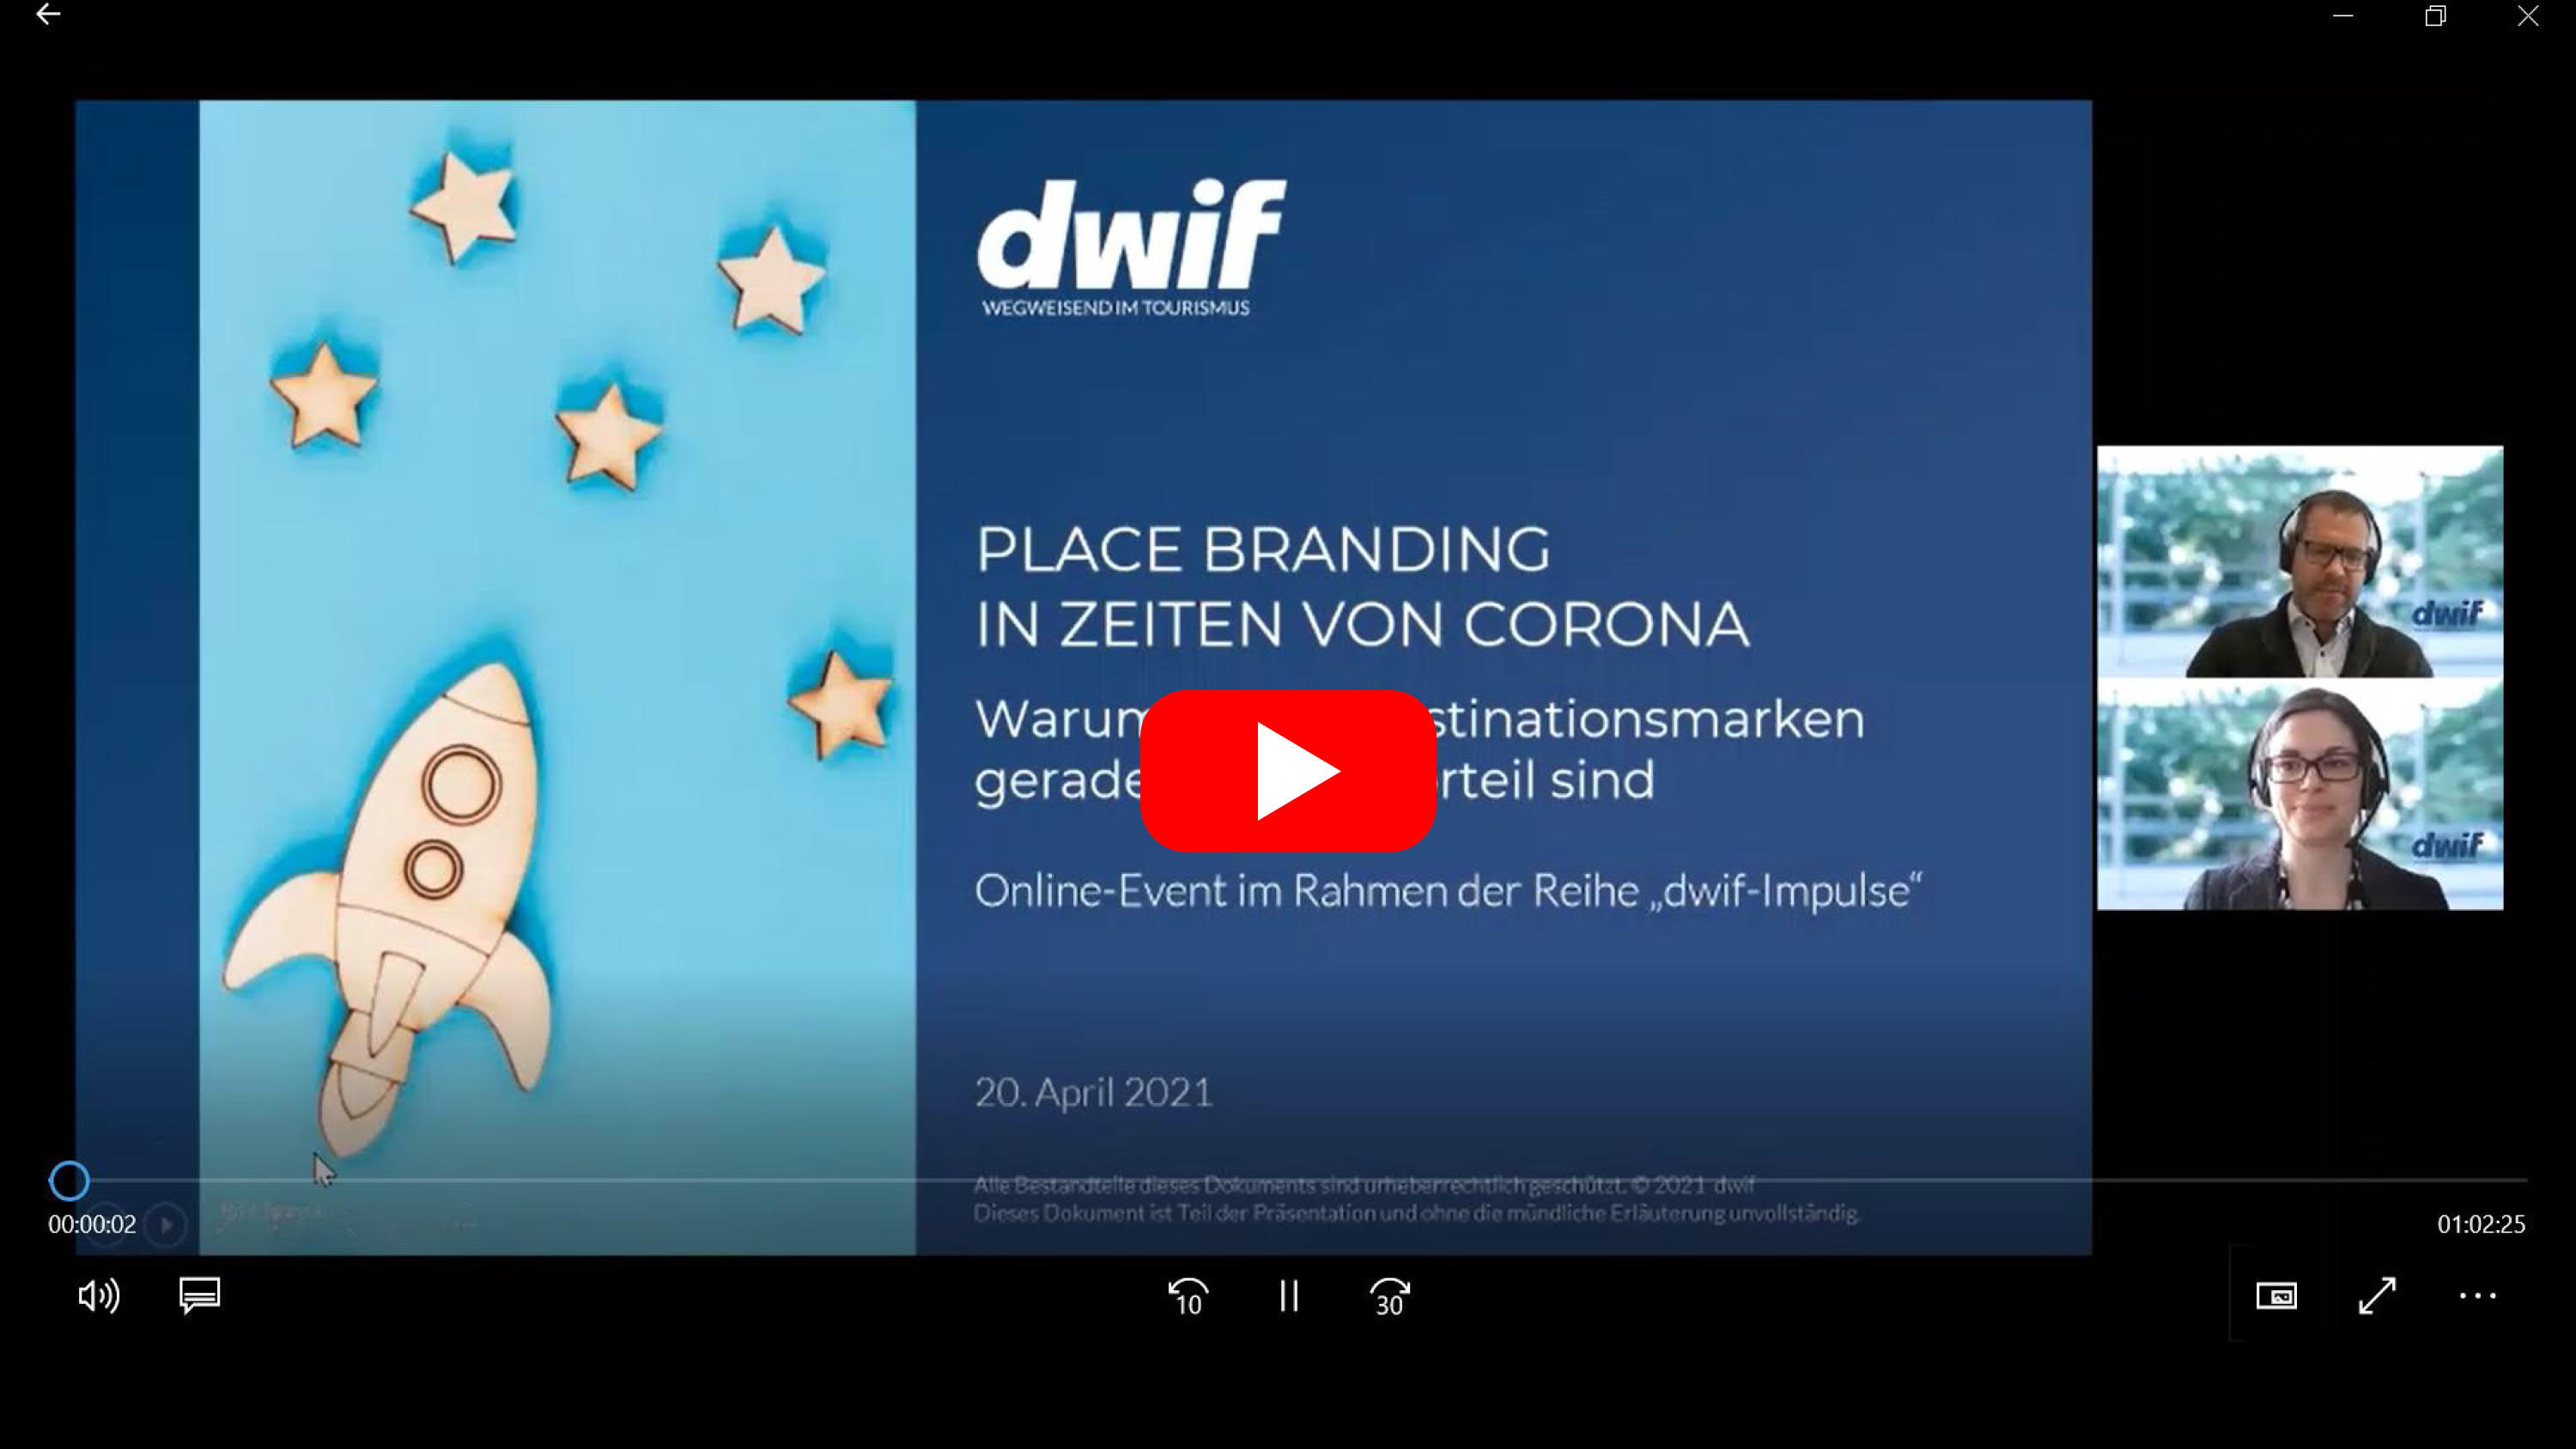 dwif-Impulse: Place Branding in Zeiten von Corona